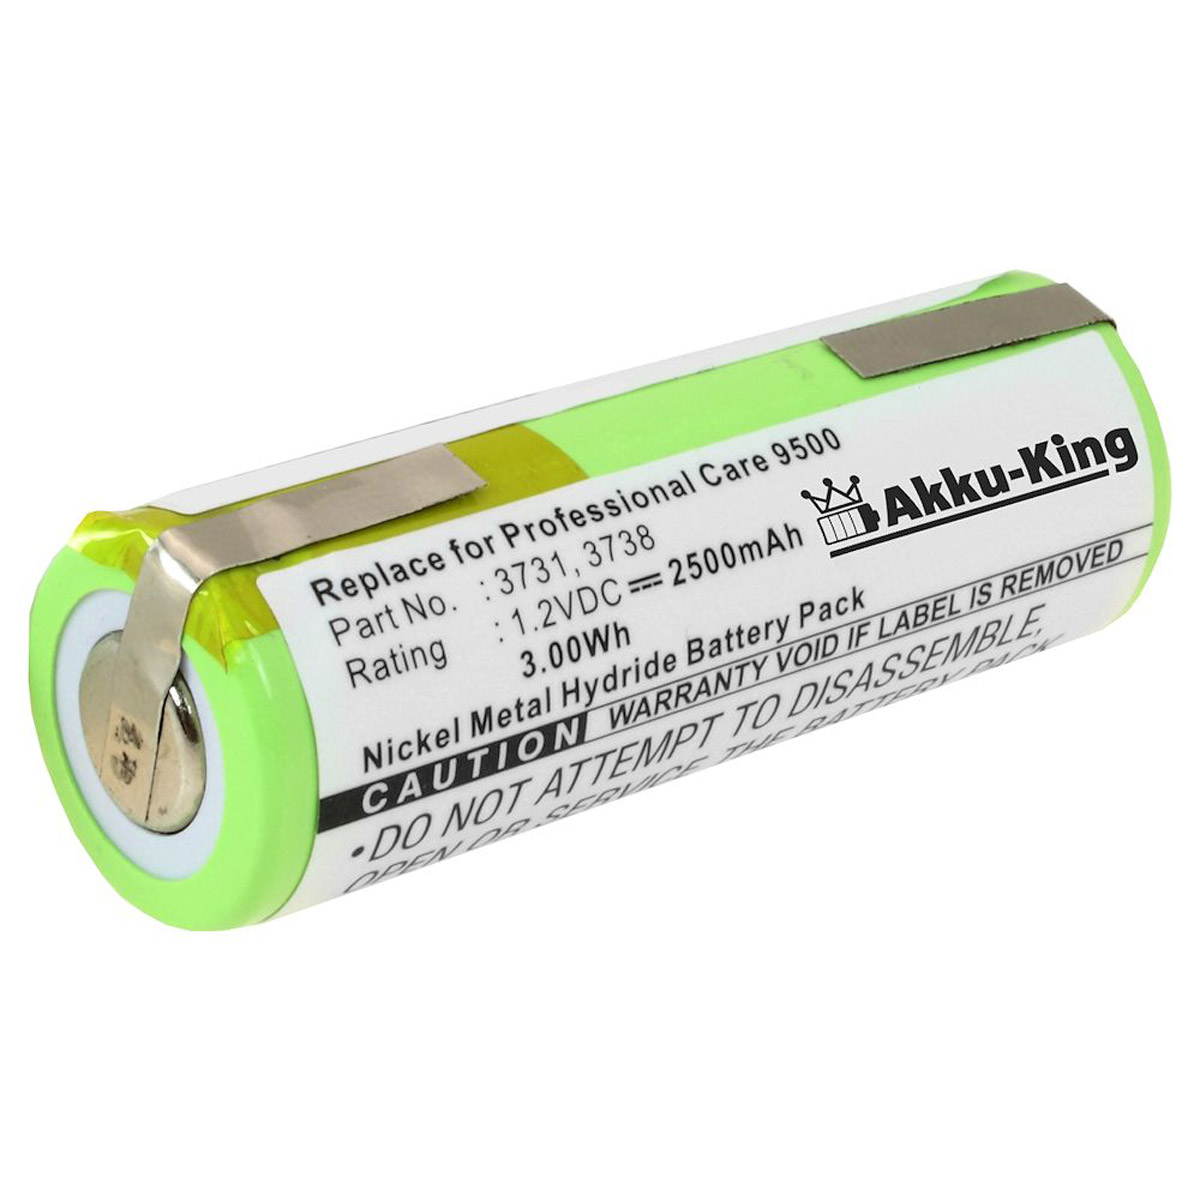 AKKU-KING Akku kompatibel mit Oral-B Ni-MH Geräte-Akku, 3731 Volt, 2500mAh 1.2